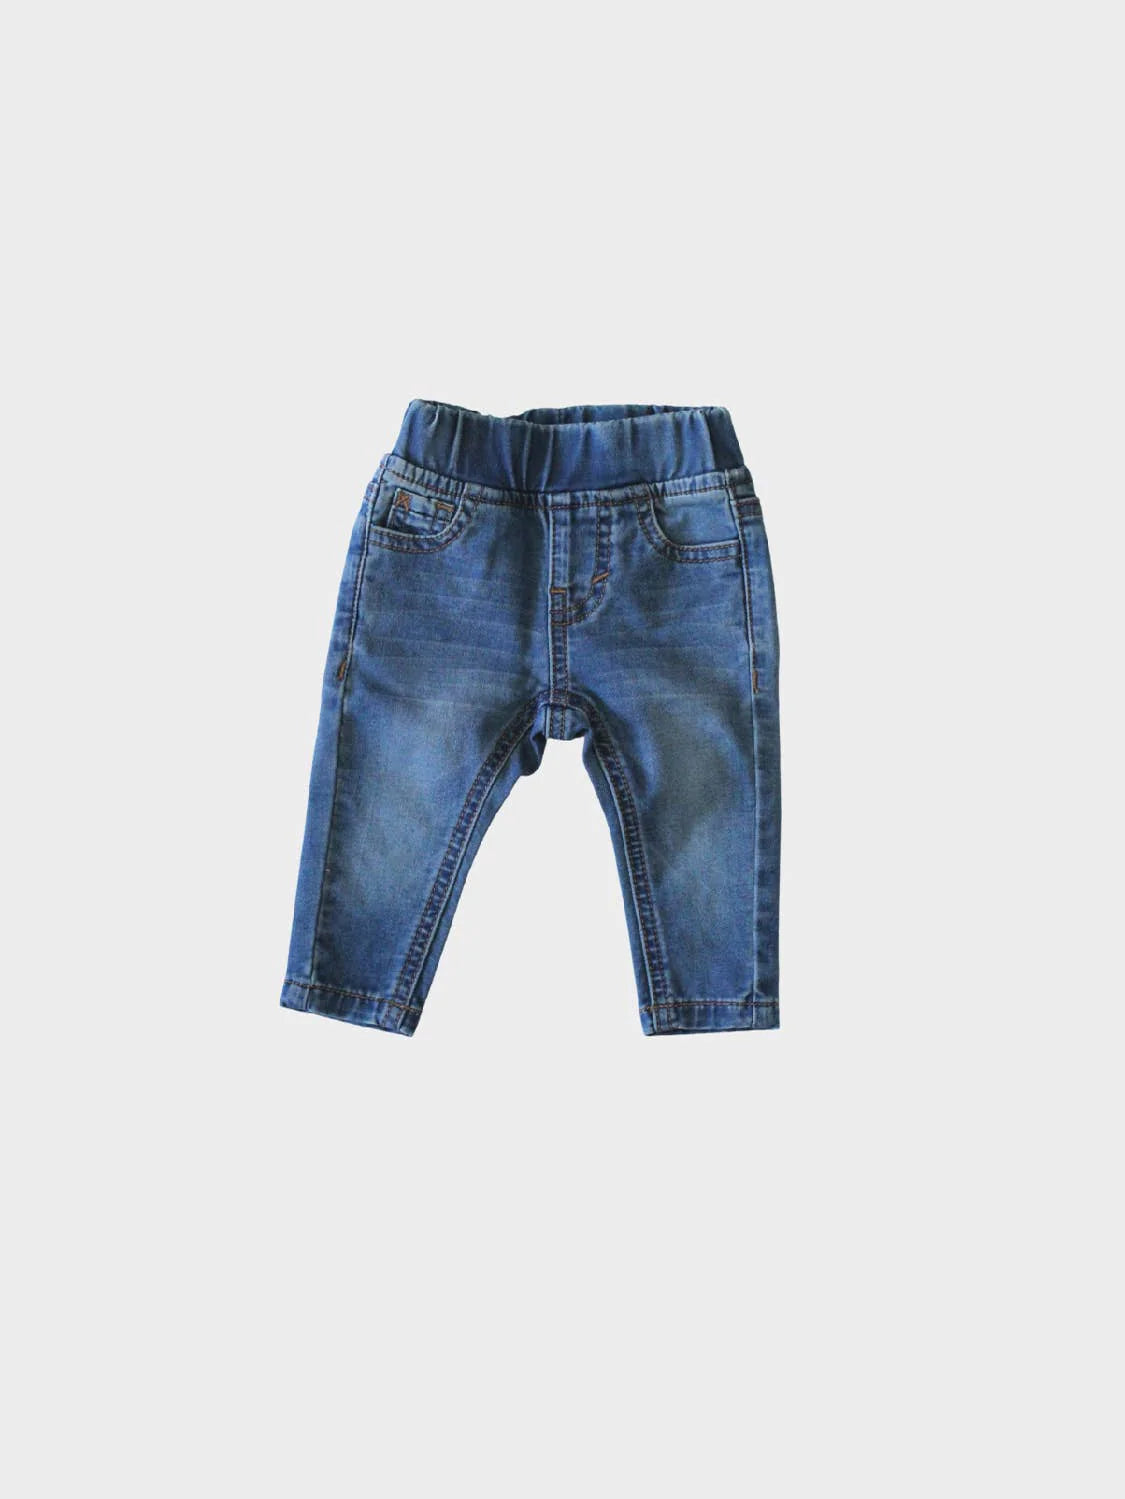 Babysprouts- Denim Jeans - Medium Wash